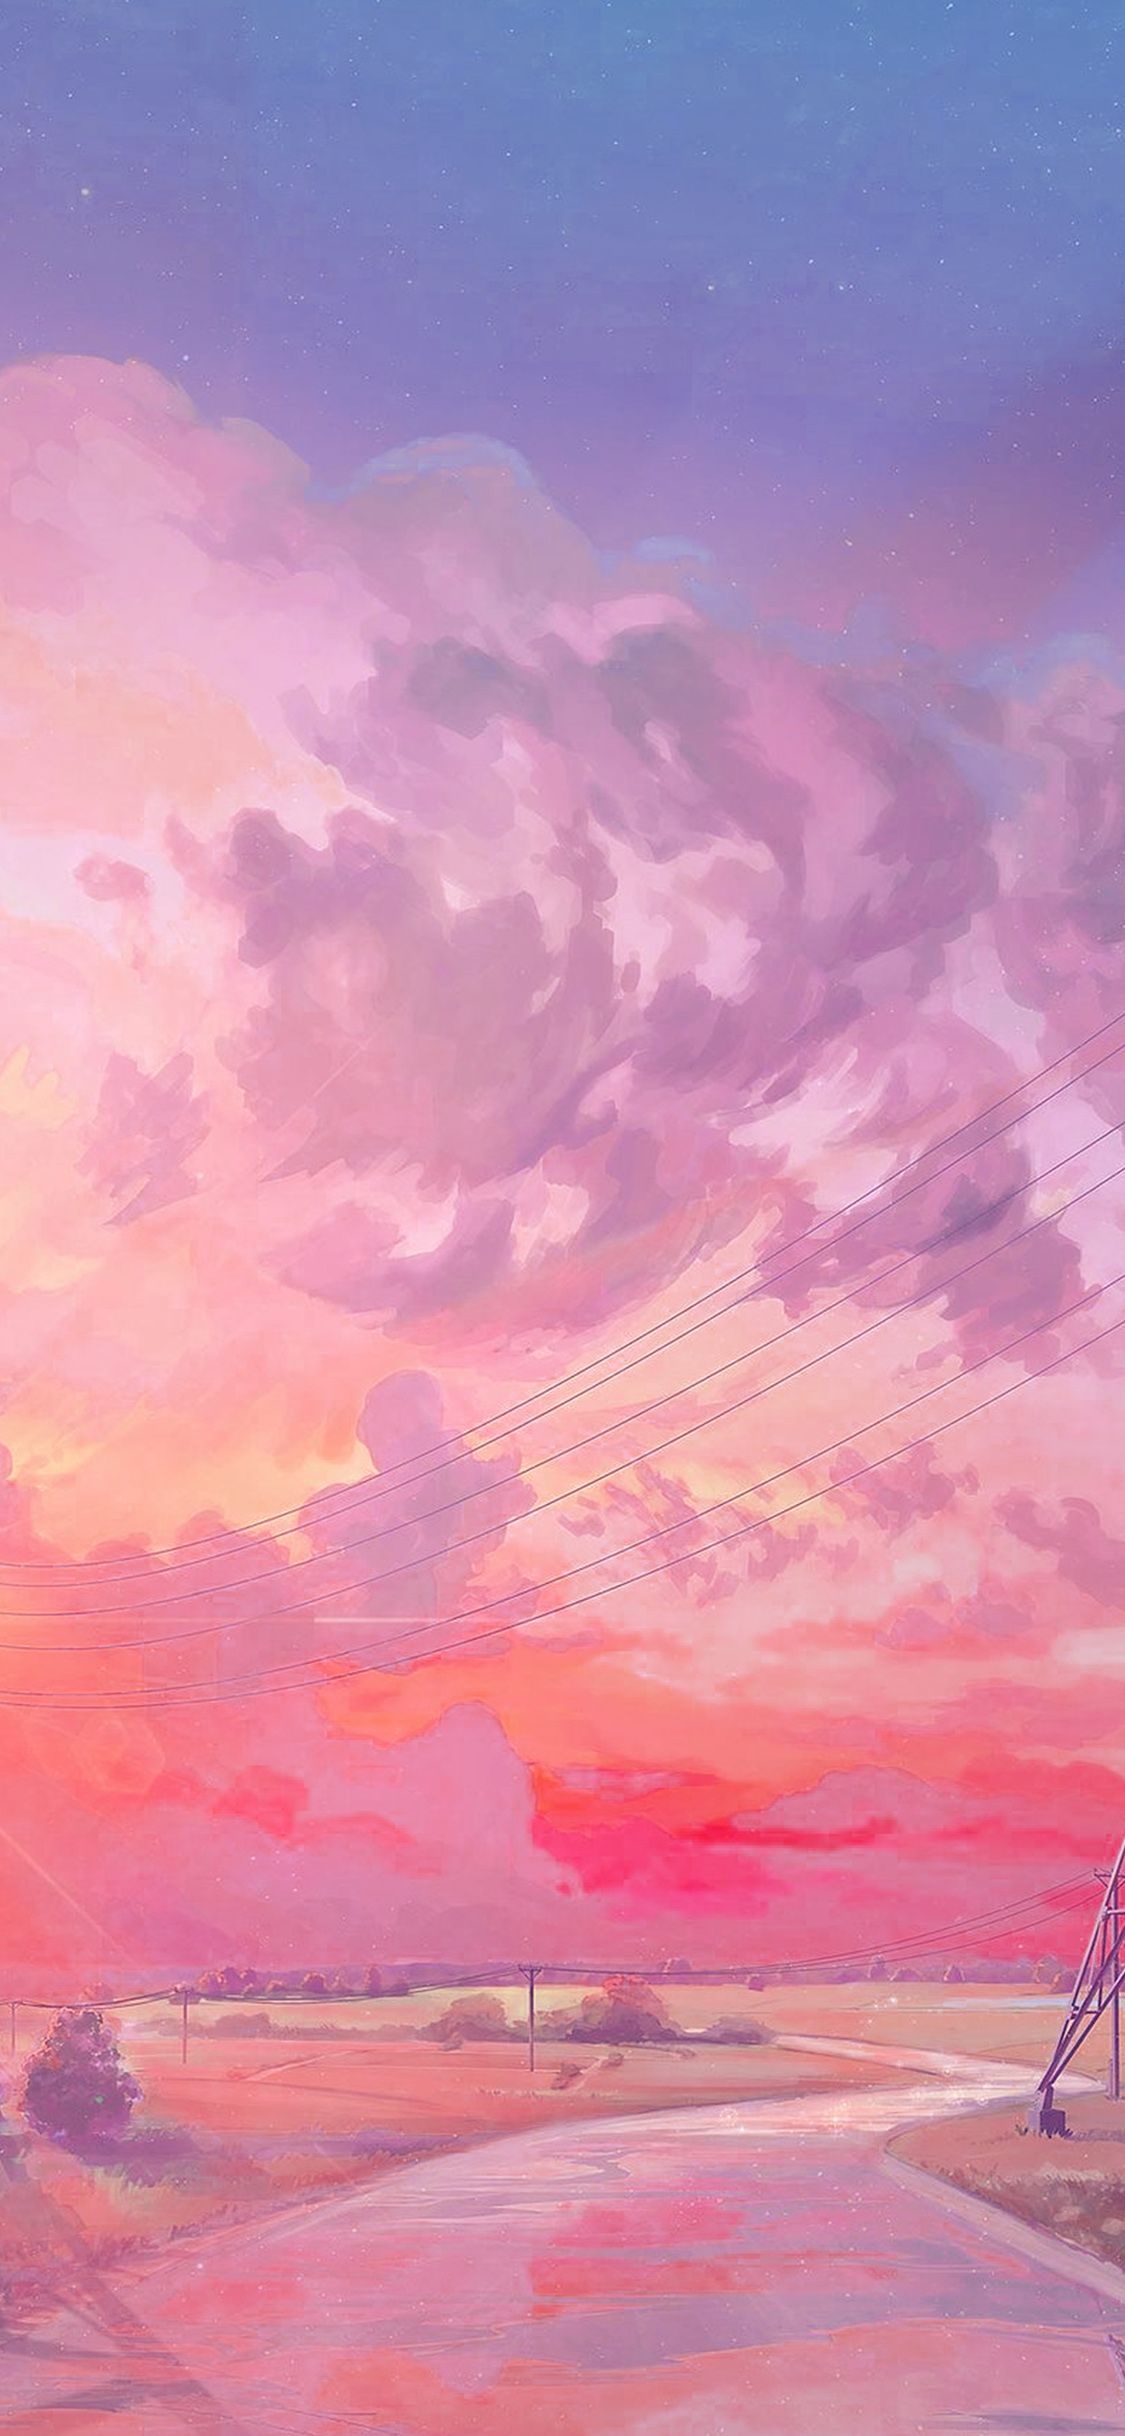 iPhone X wallpaper. arseniy chebynkin sunset illustration art pink